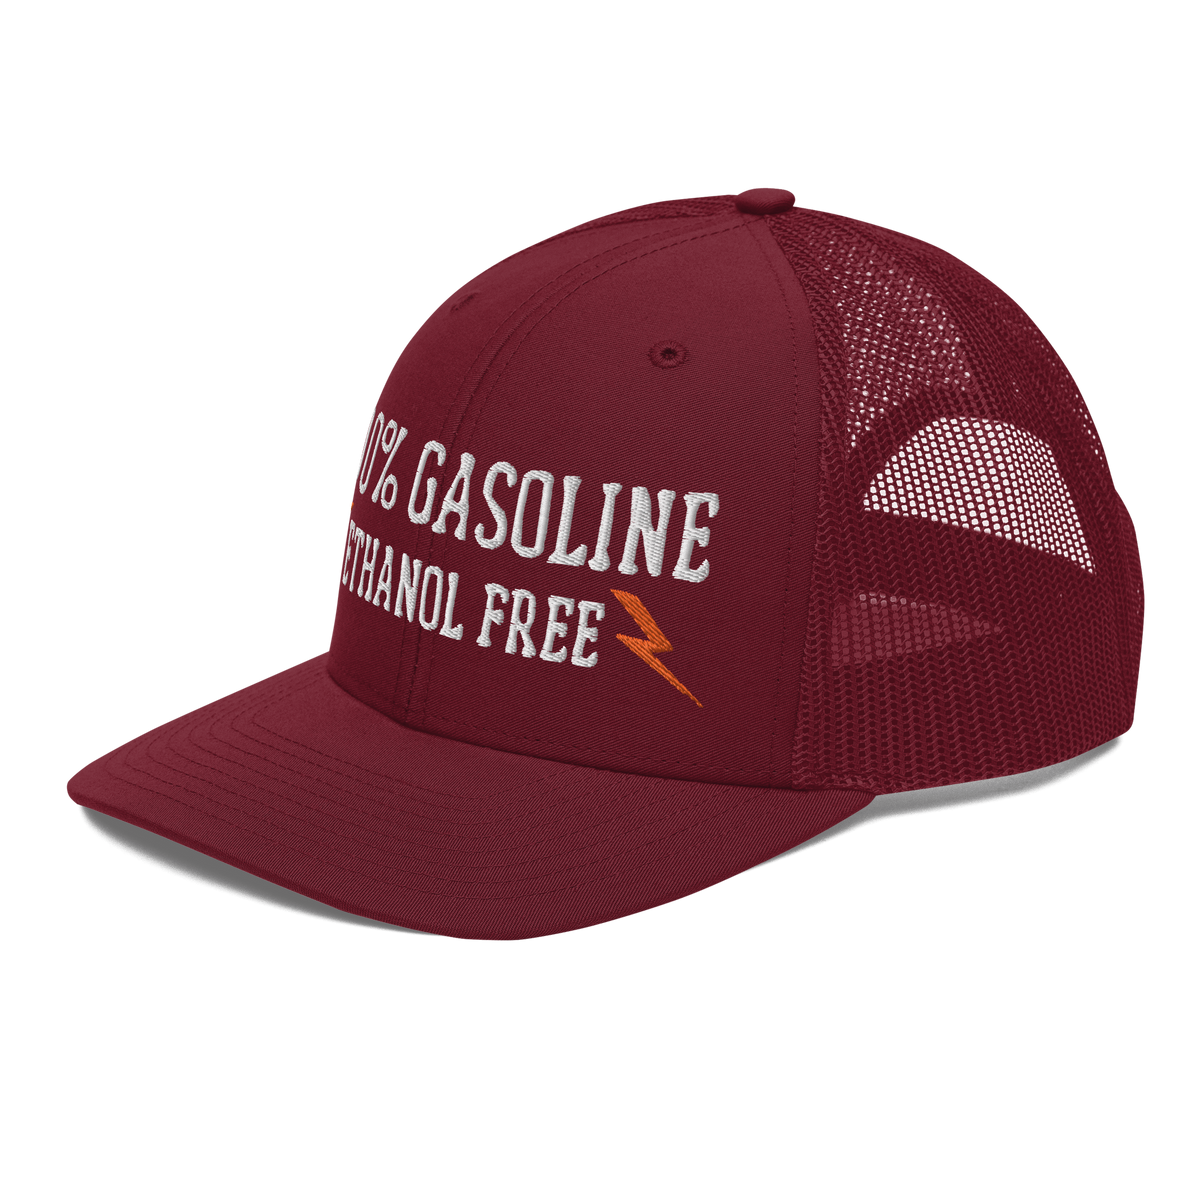 100% Gasoline